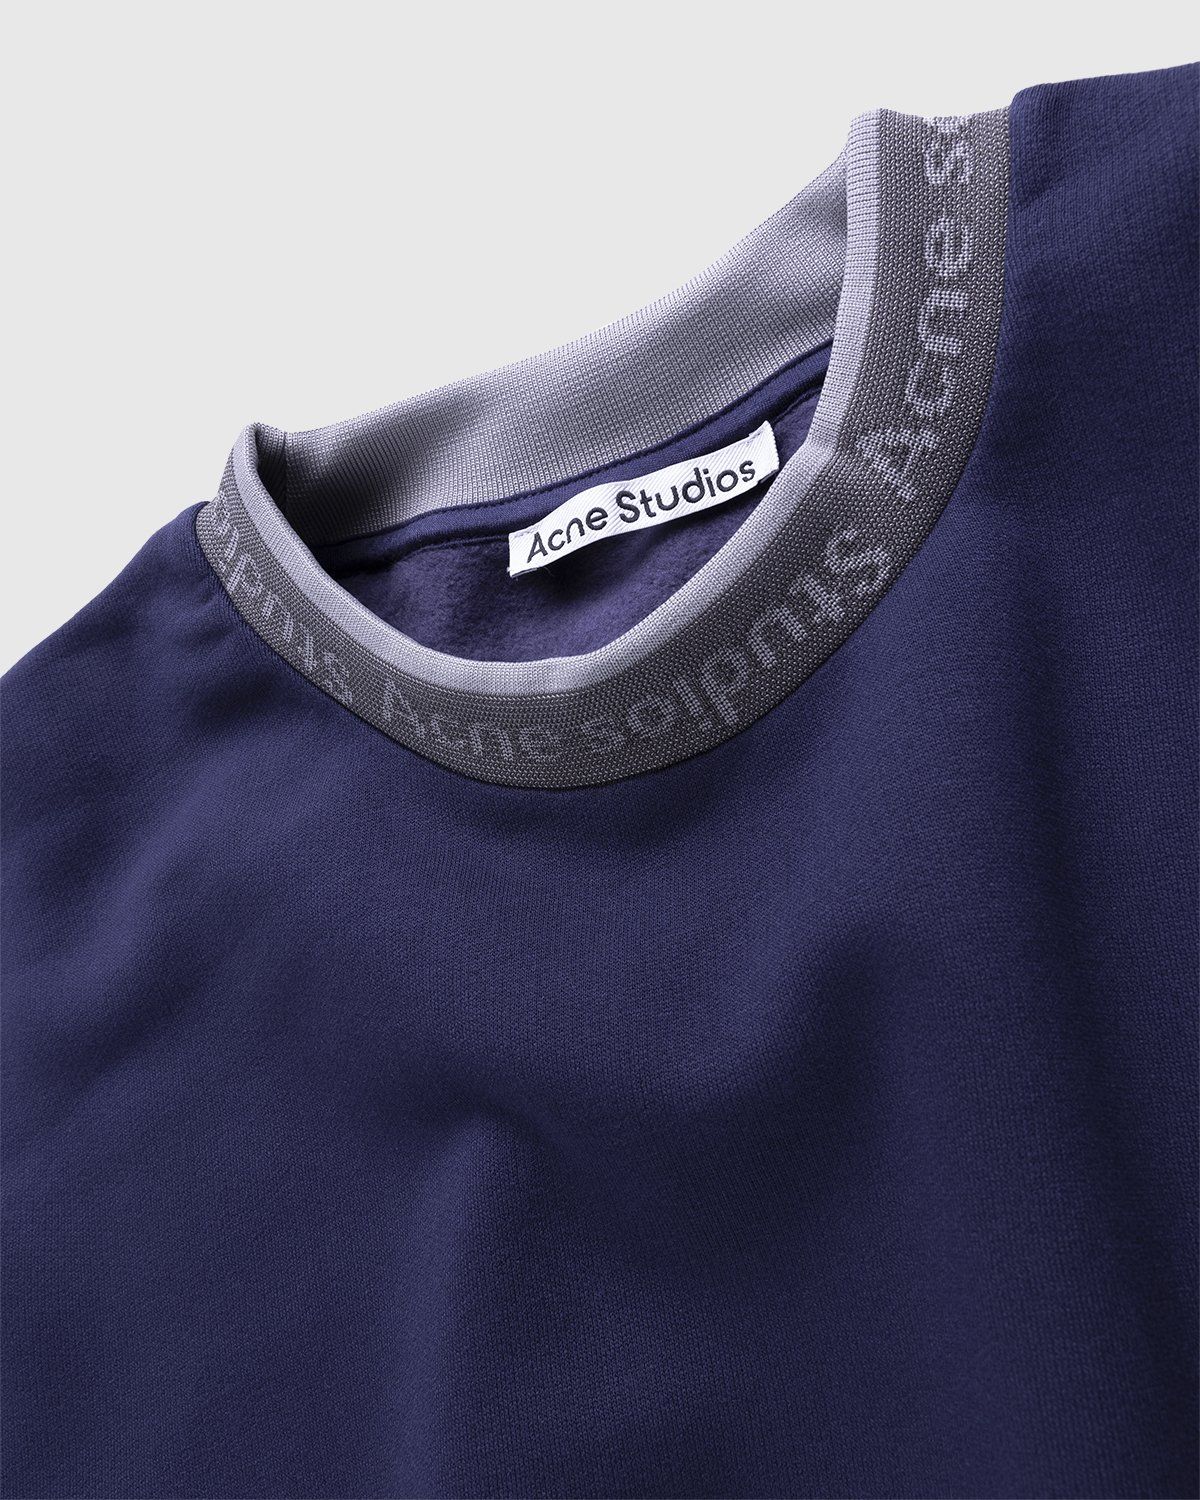 Acne Studios – Logo Rib Sweatshirt Indigo Blue - Sweatshirts - Blue - Image 3